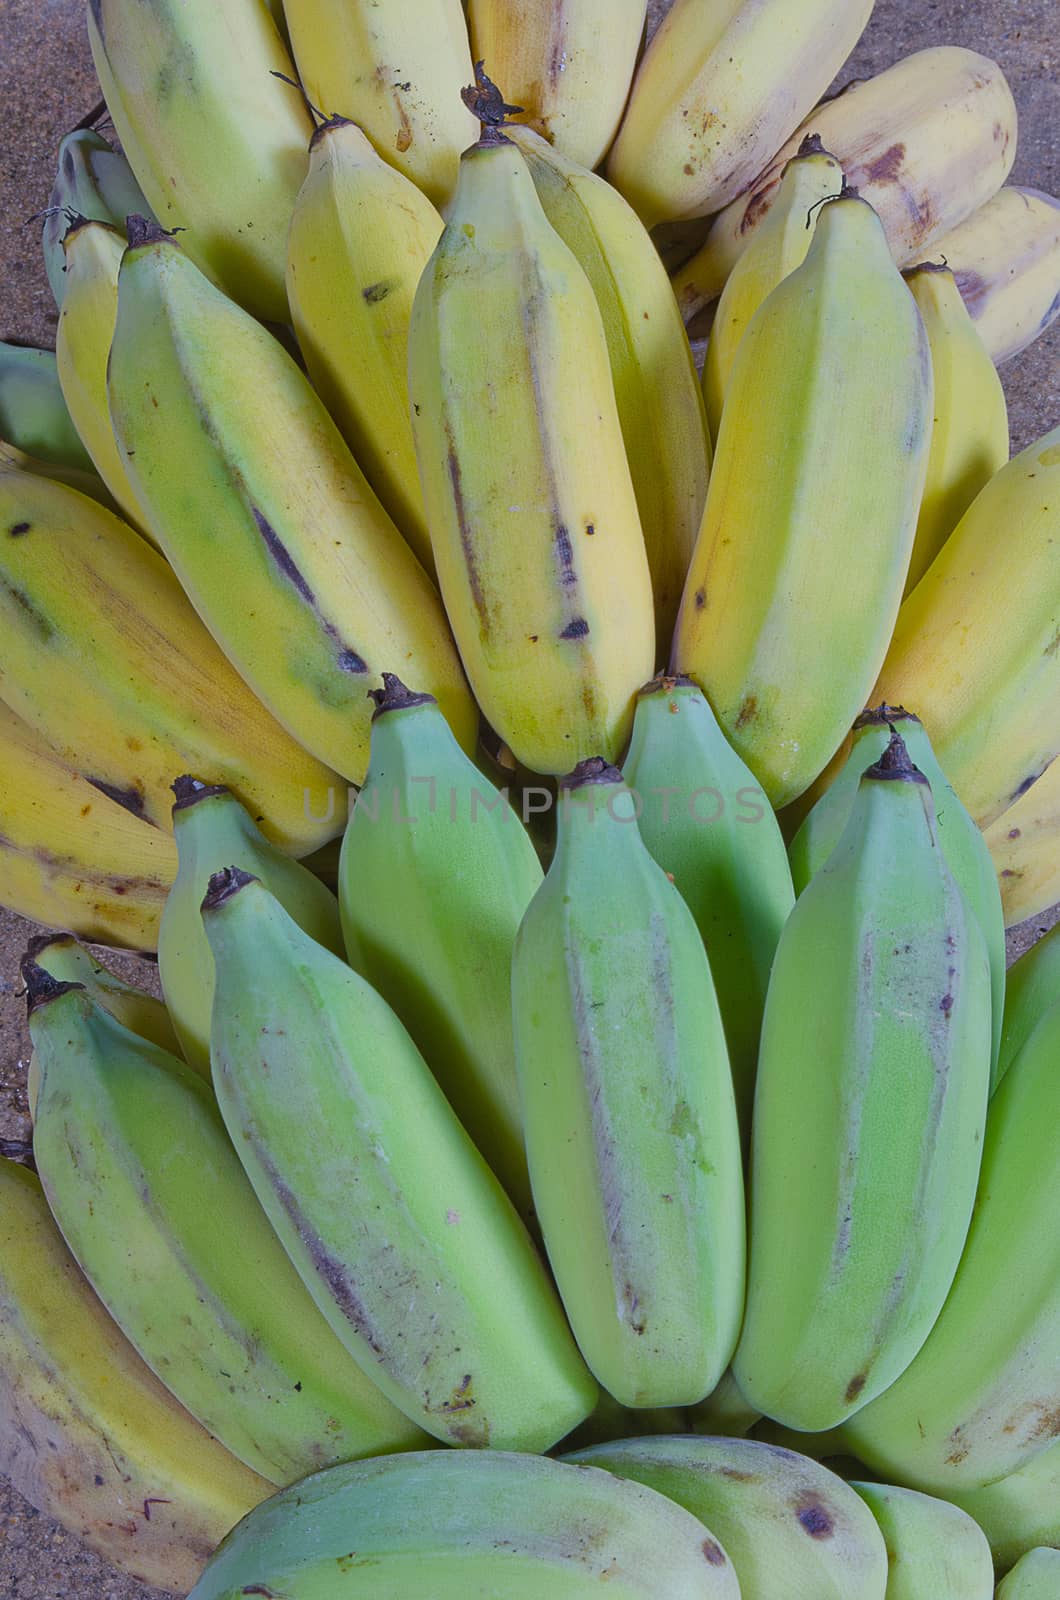 Ripe Banana by kobfujar